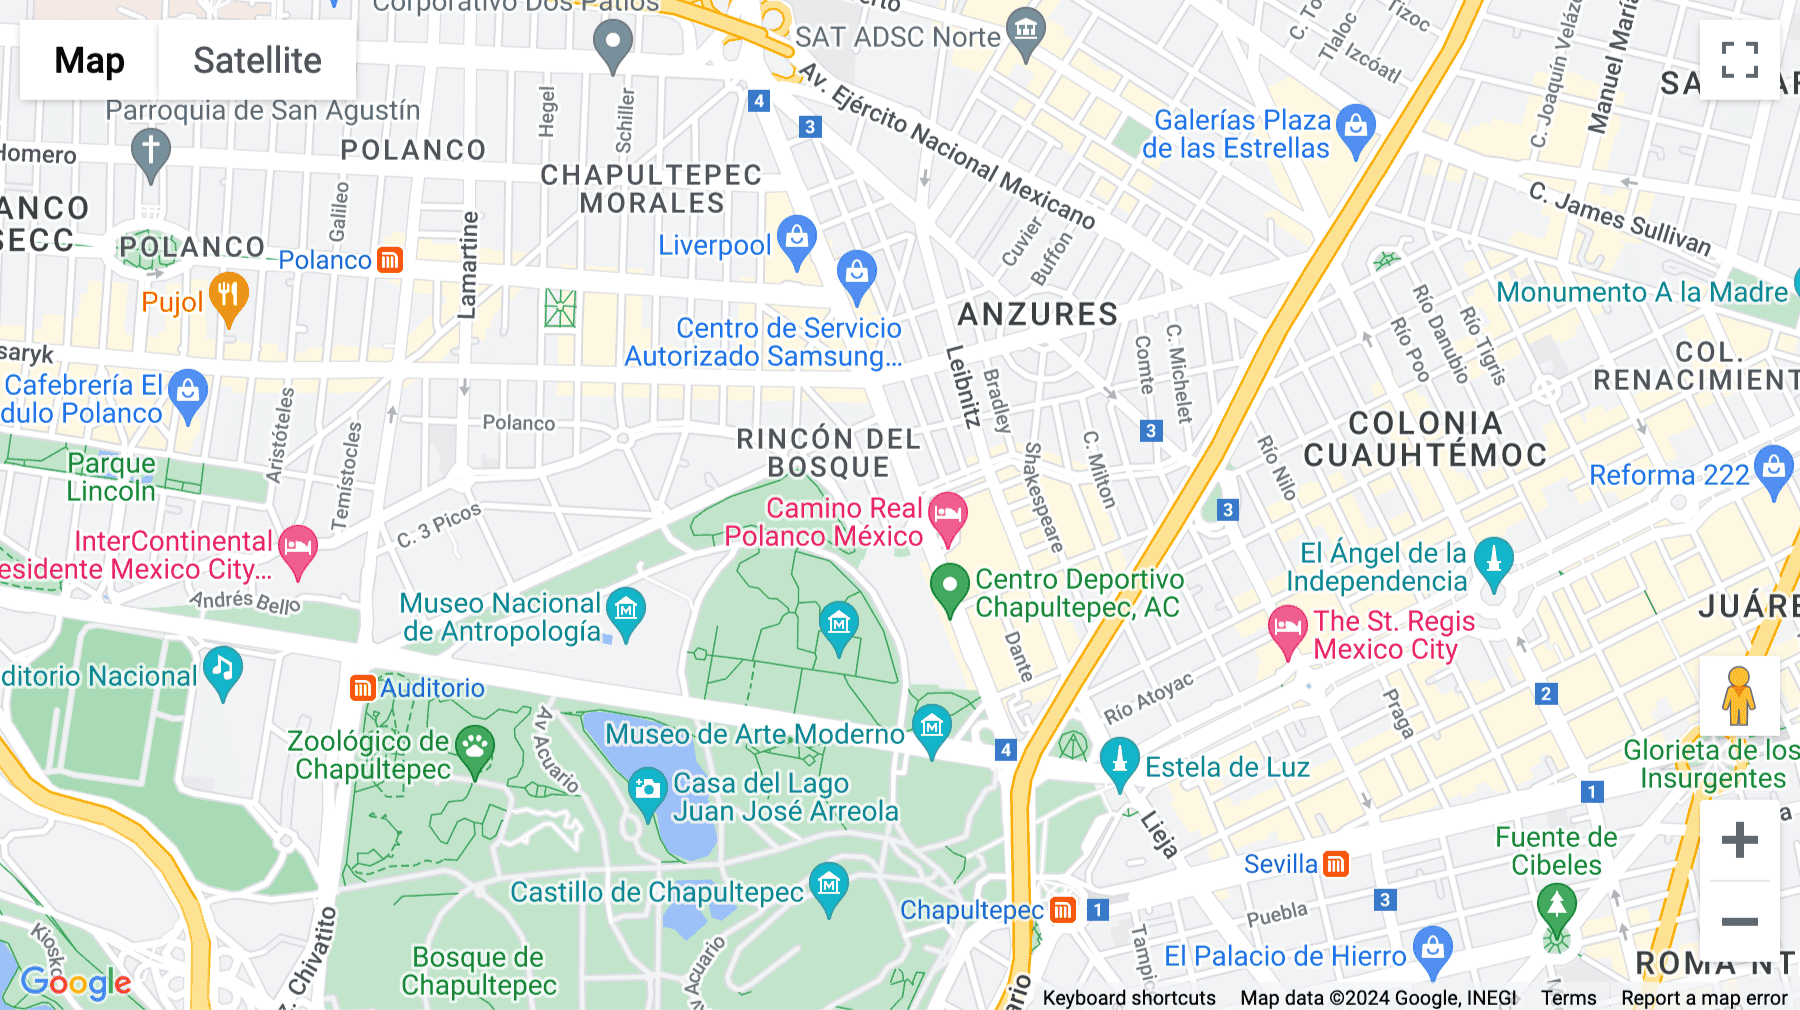 Click for interative map of Mariano Escobedo 595, Bosque de Chapultepec I Sección Rincón del Bosqu, Mexico City